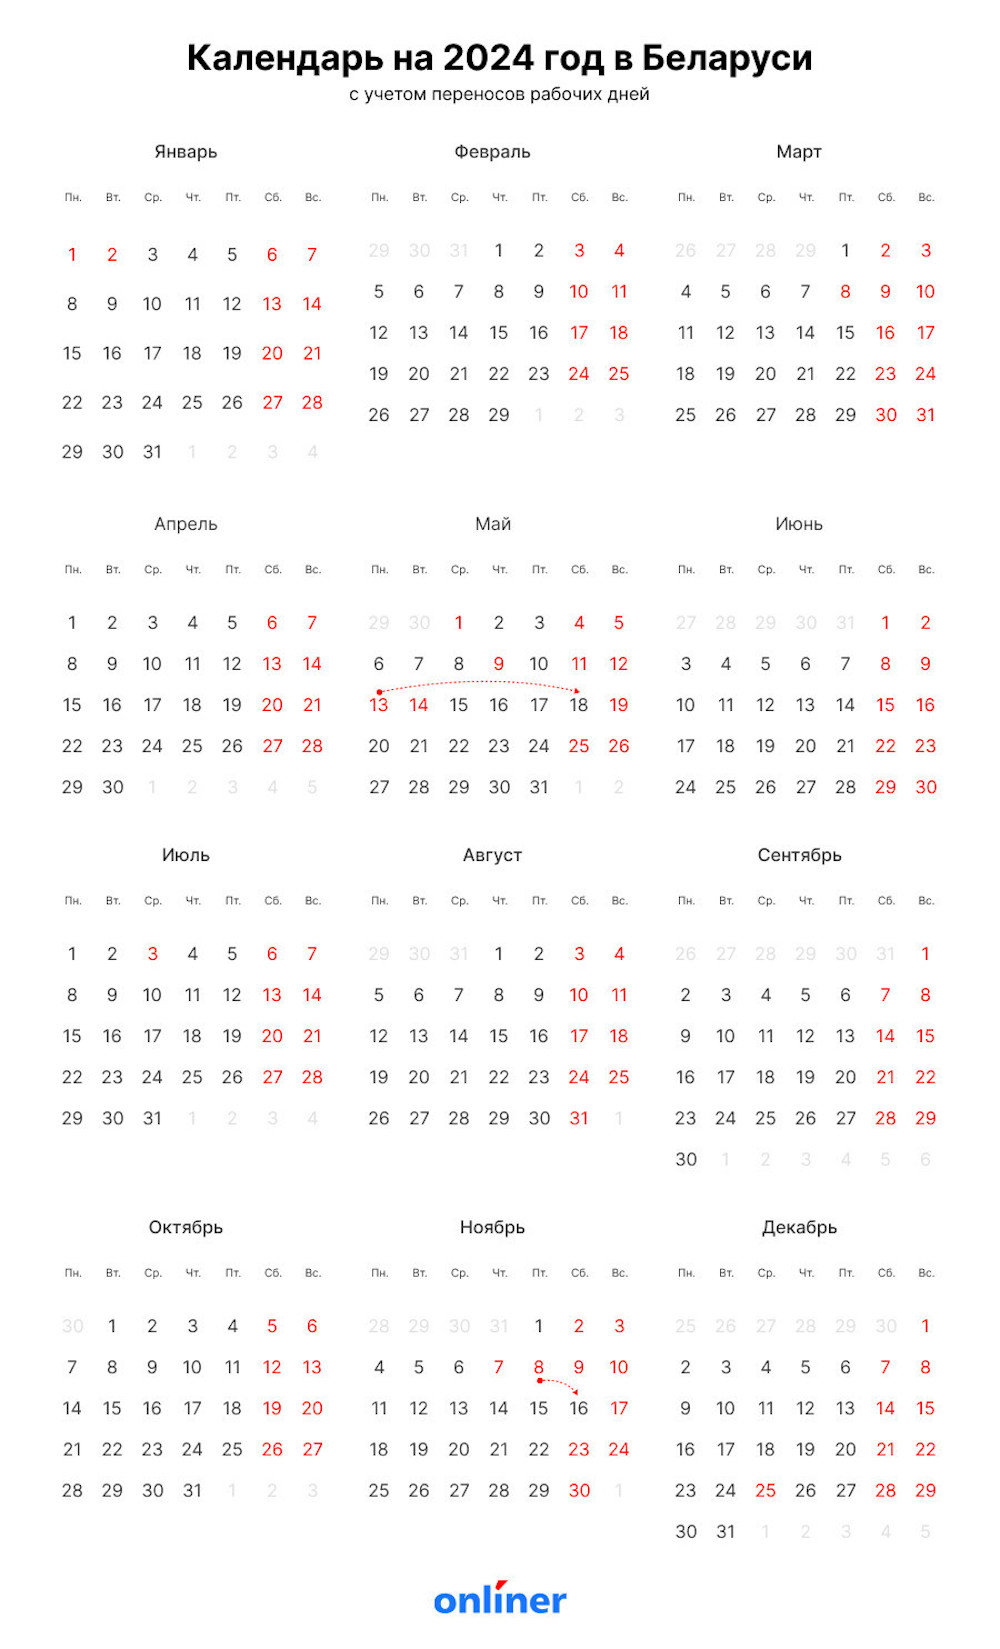 Календарь на 2024 год в Беларуси. Иллюстрация: onliner.by.